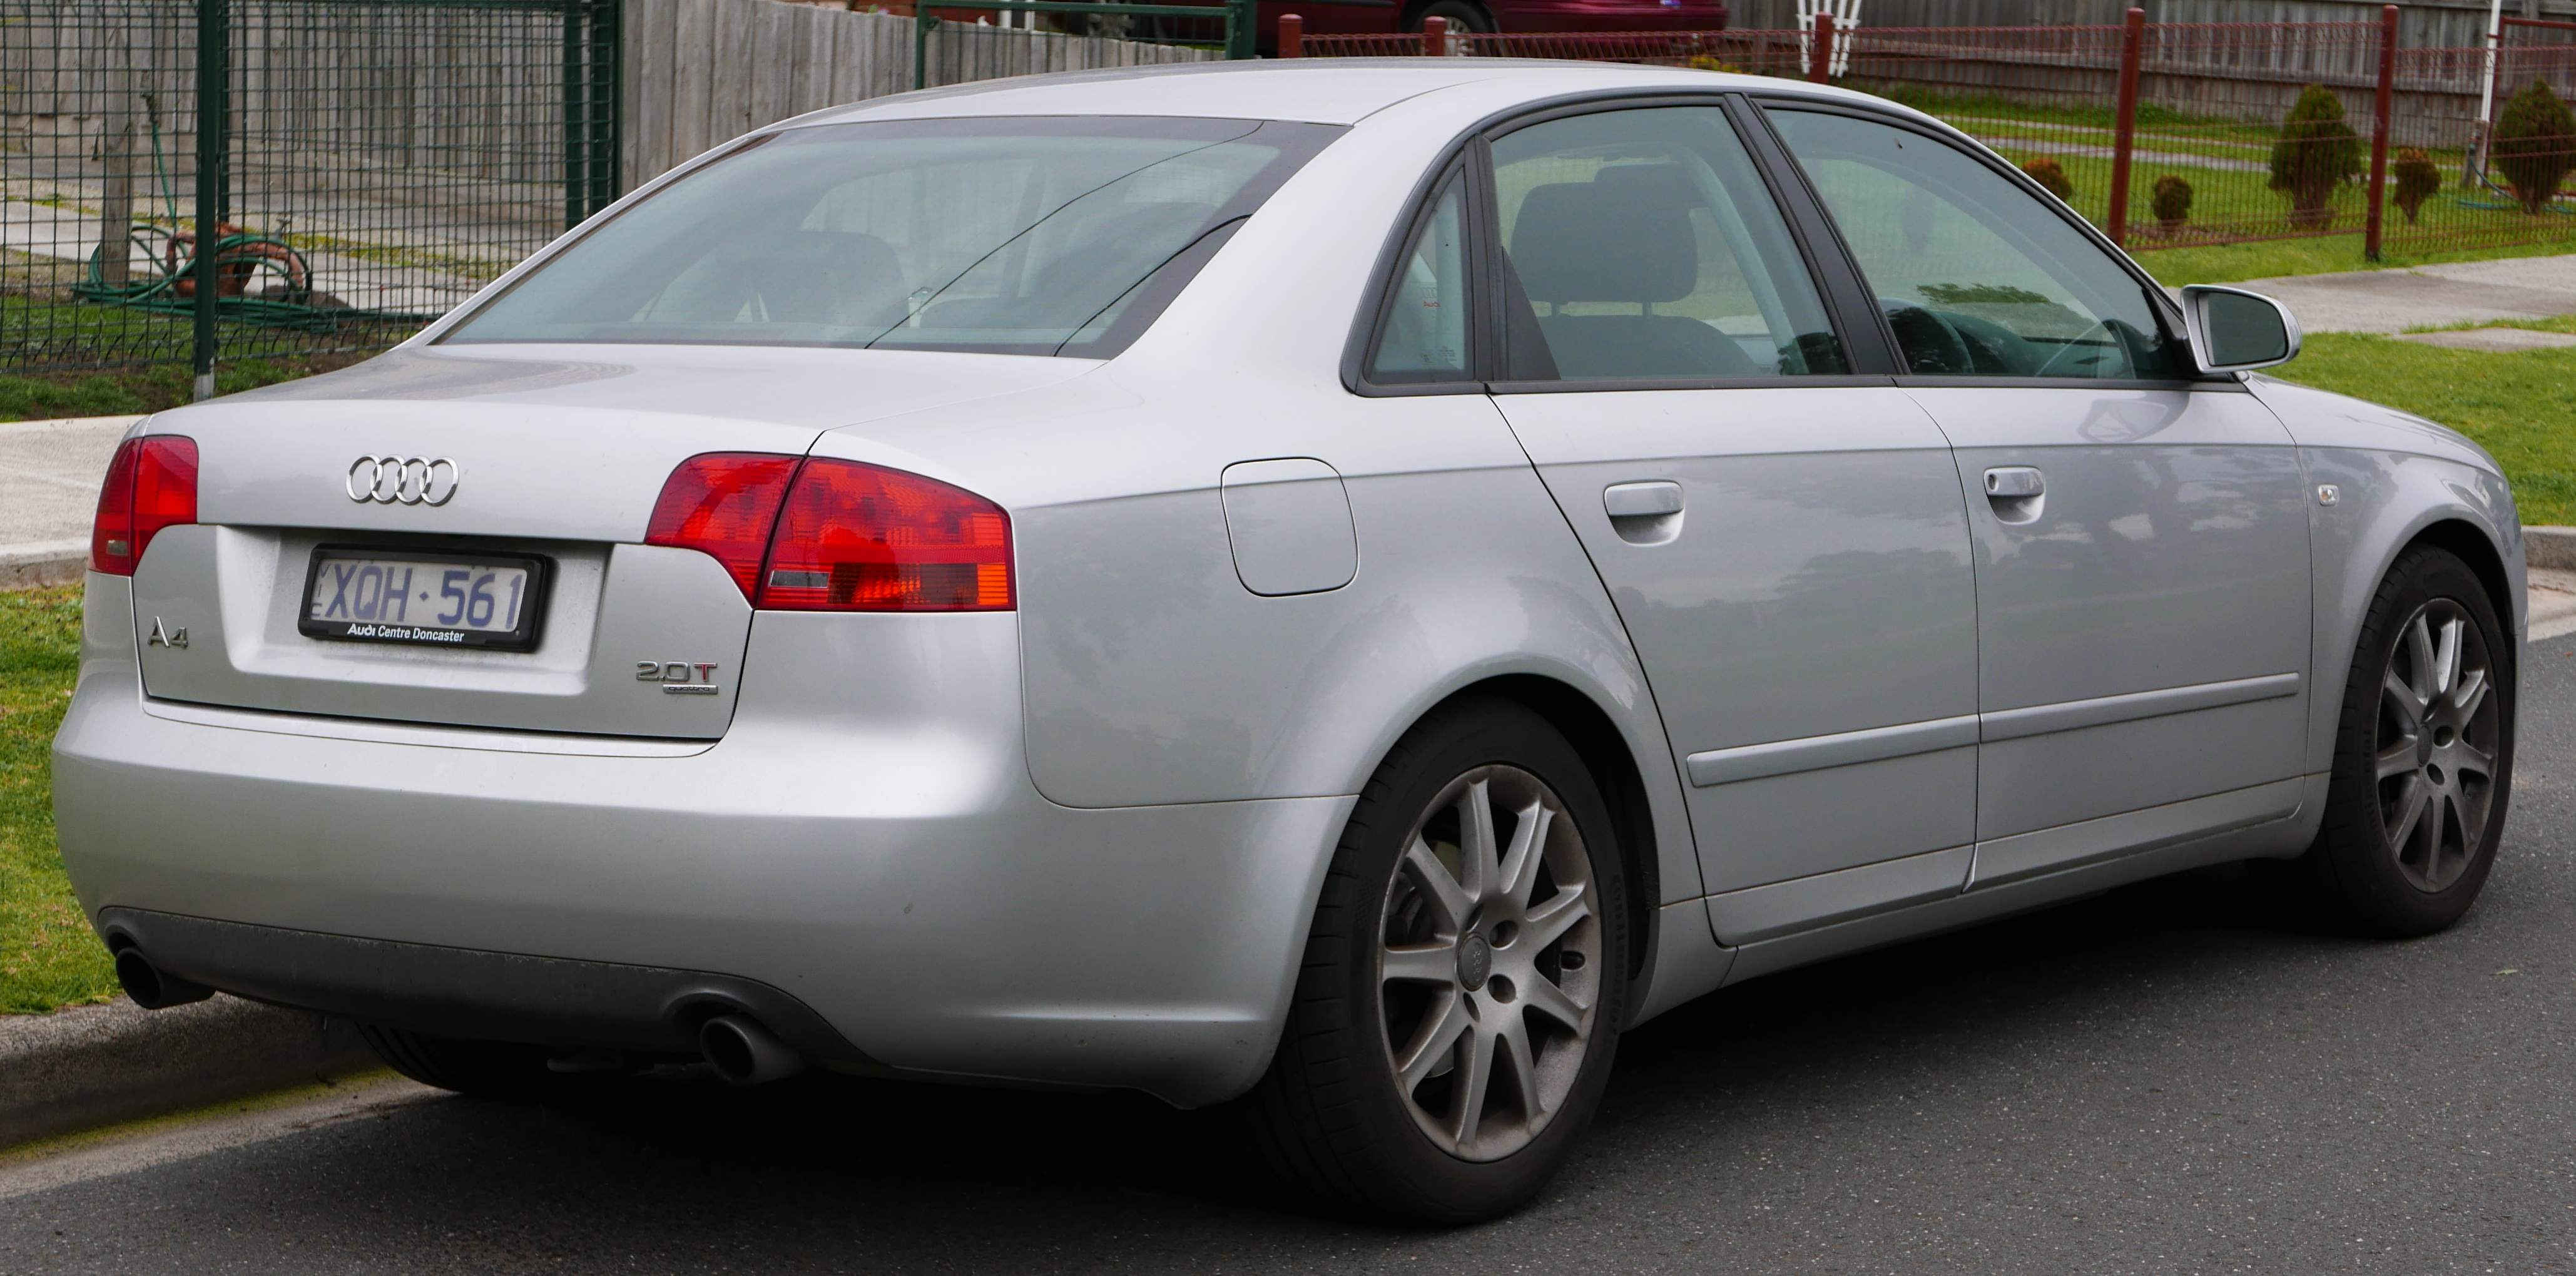 Laatste enkel en alleen Draak File:2005 Audi A4 (8EC) 2.0 TFSI quattro sedan (2015-07-10) 02.jpg -  Wikimedia Commons